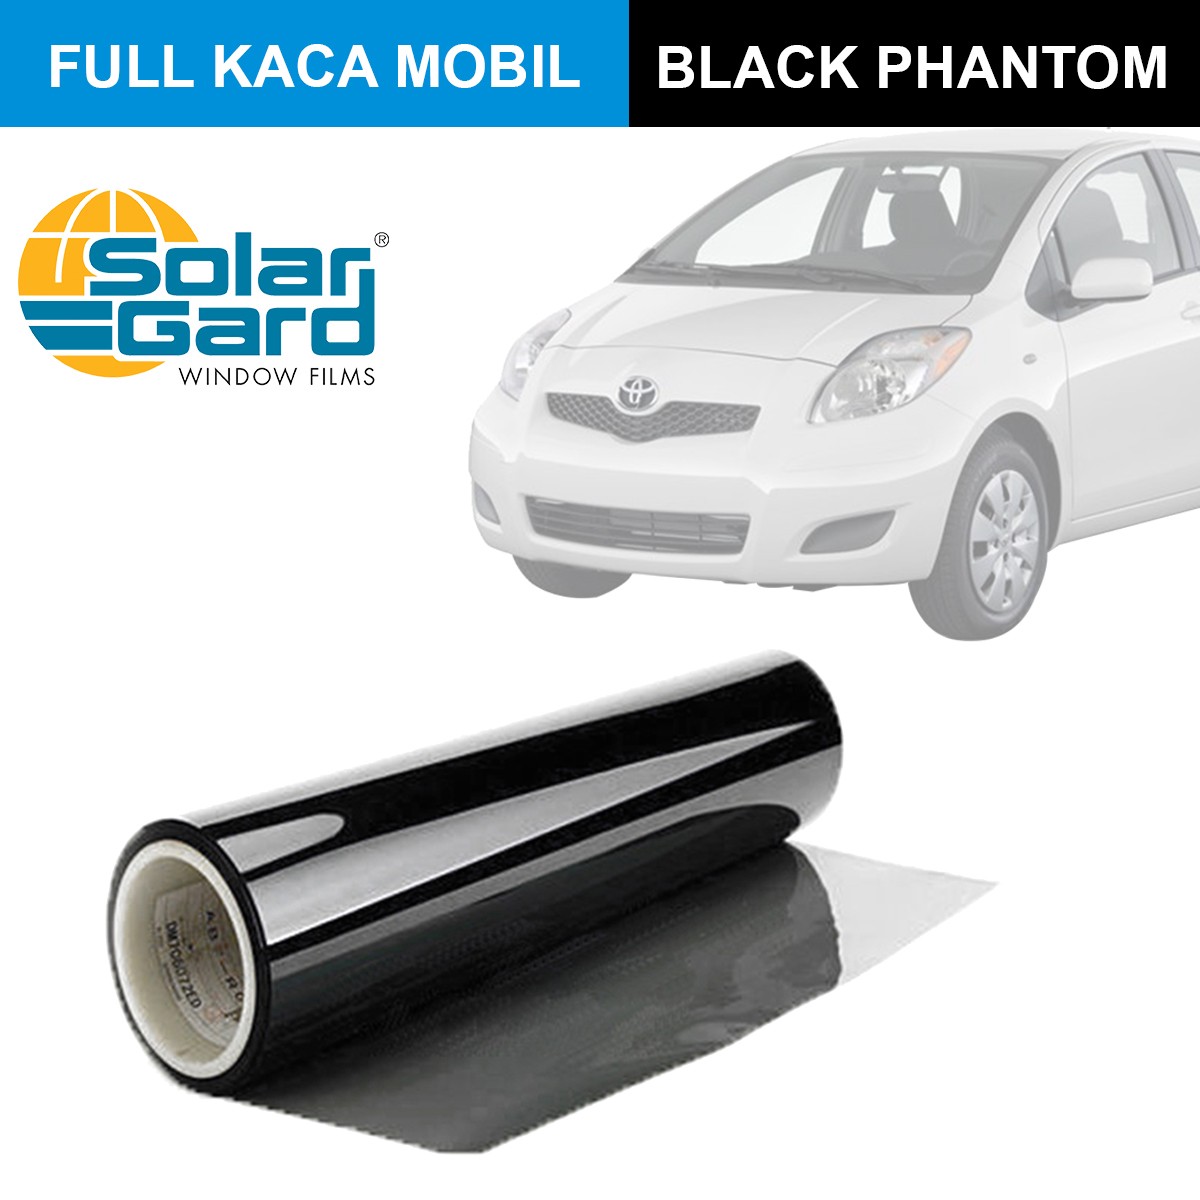 KACA FILM SOLAR GARD BLACK PHANTOM - (SMALL CAR) FULL KACA